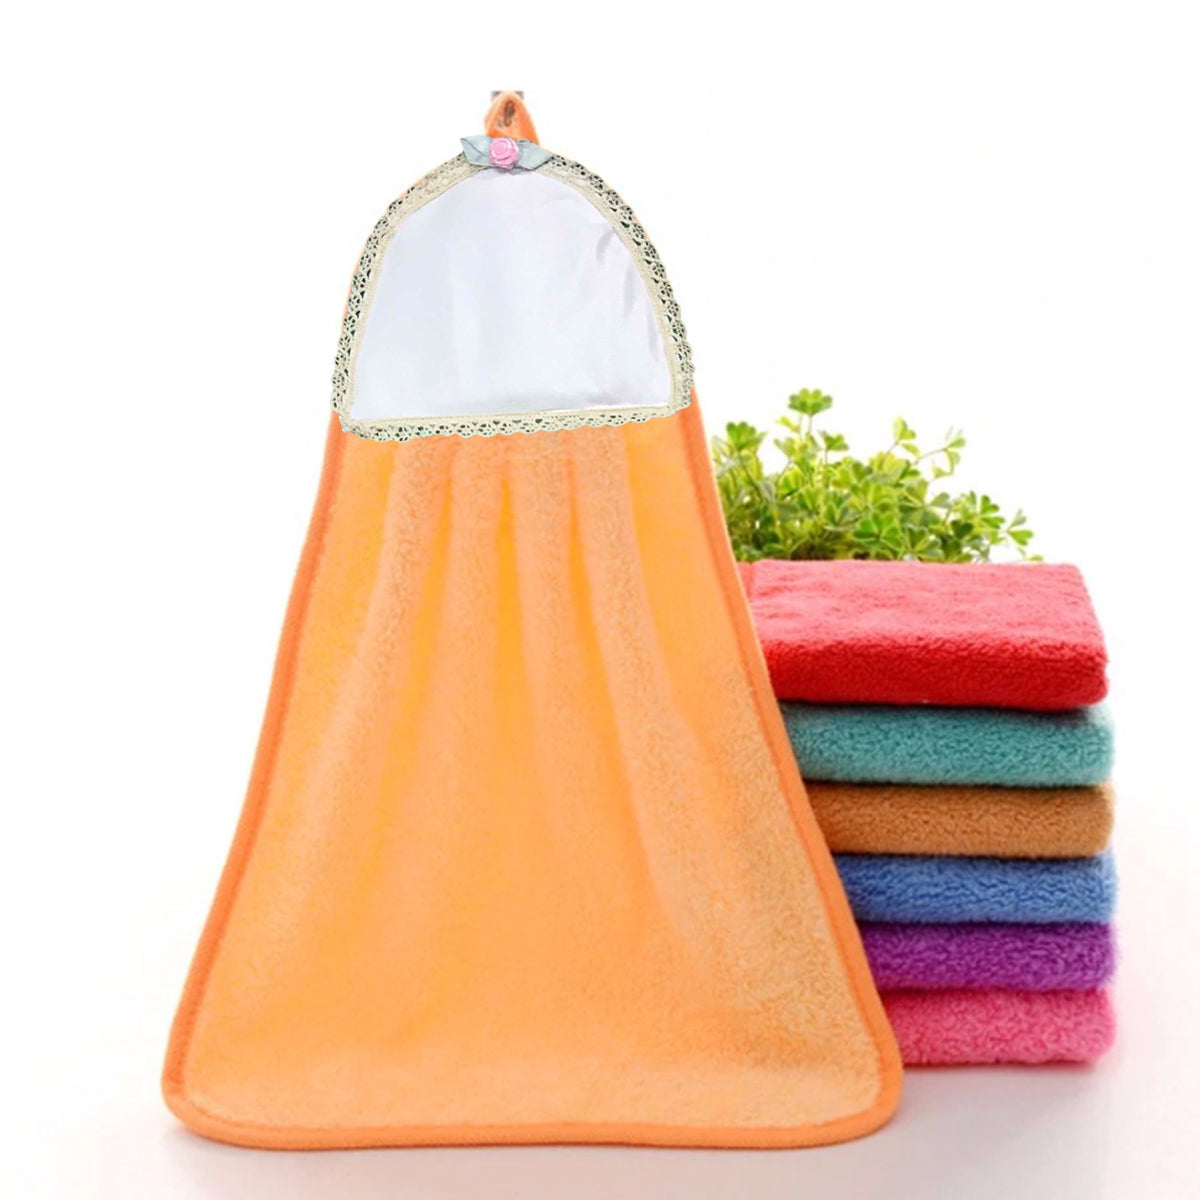 TW1 Personalised Hand Towel Printing Custom Your Photo Home Decor (YELLOW)